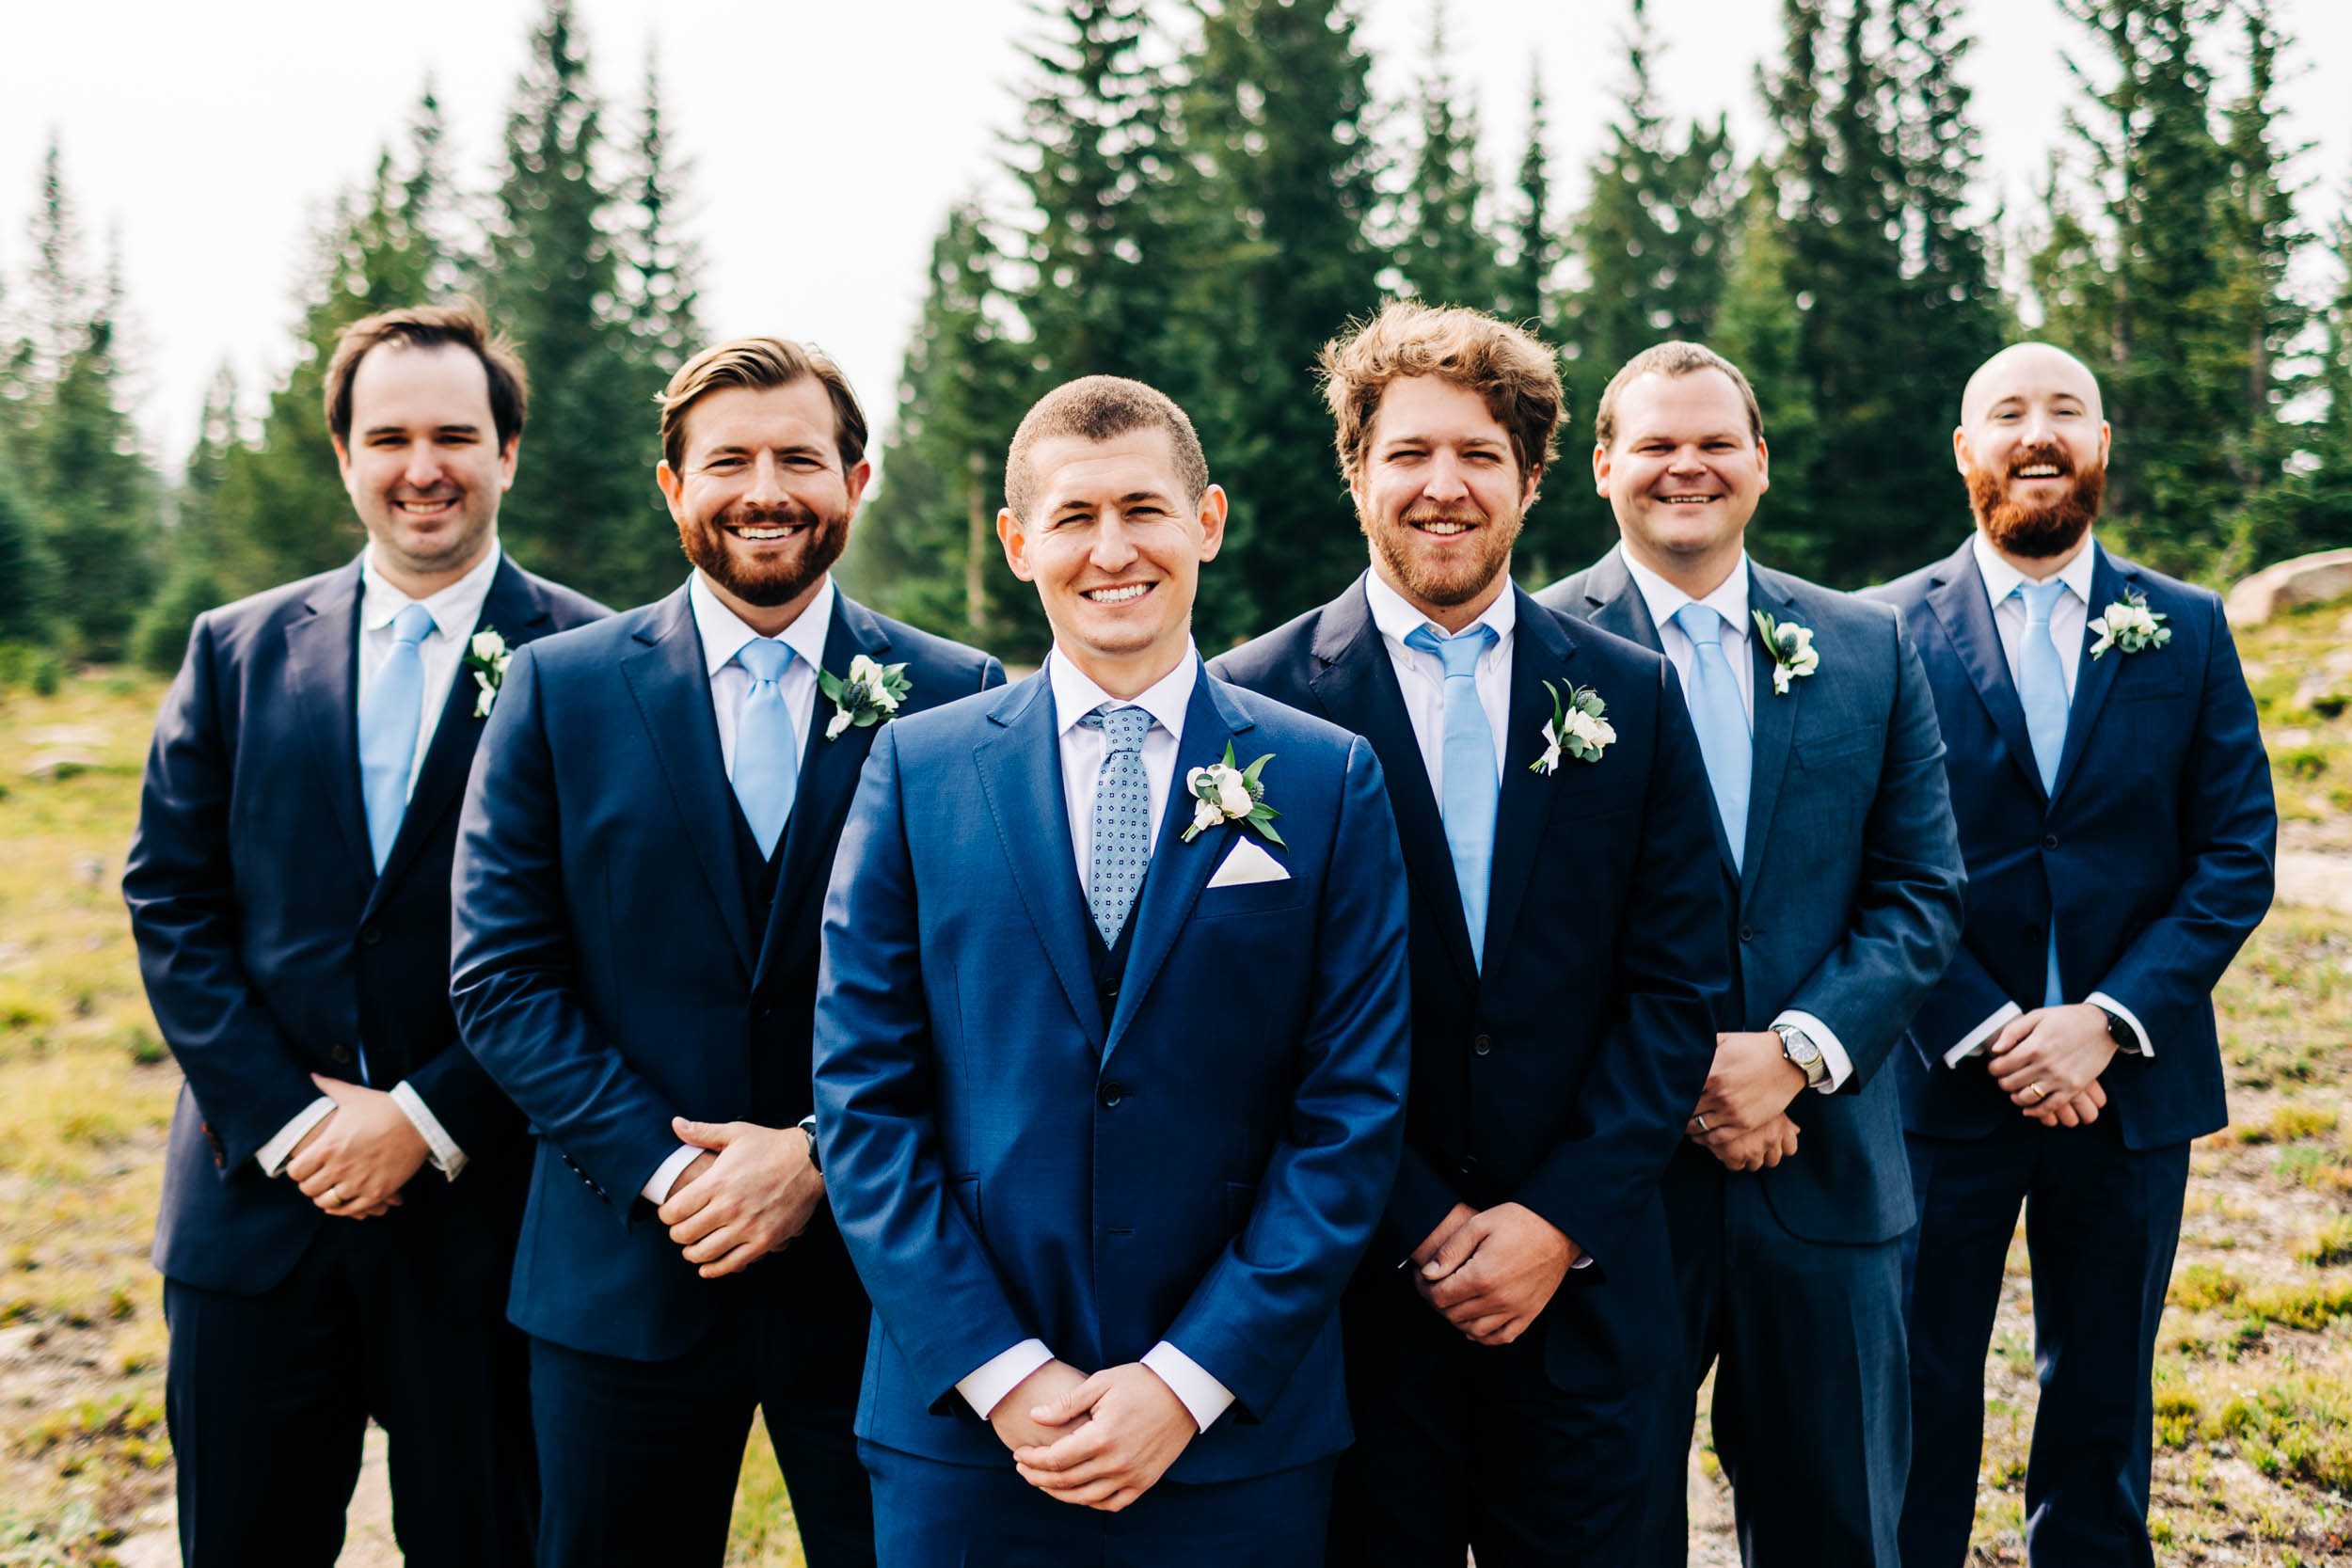 Lunch Rock wedding photos of groomsmen by Shea McGrath Photography Colorado Wedding Photographer